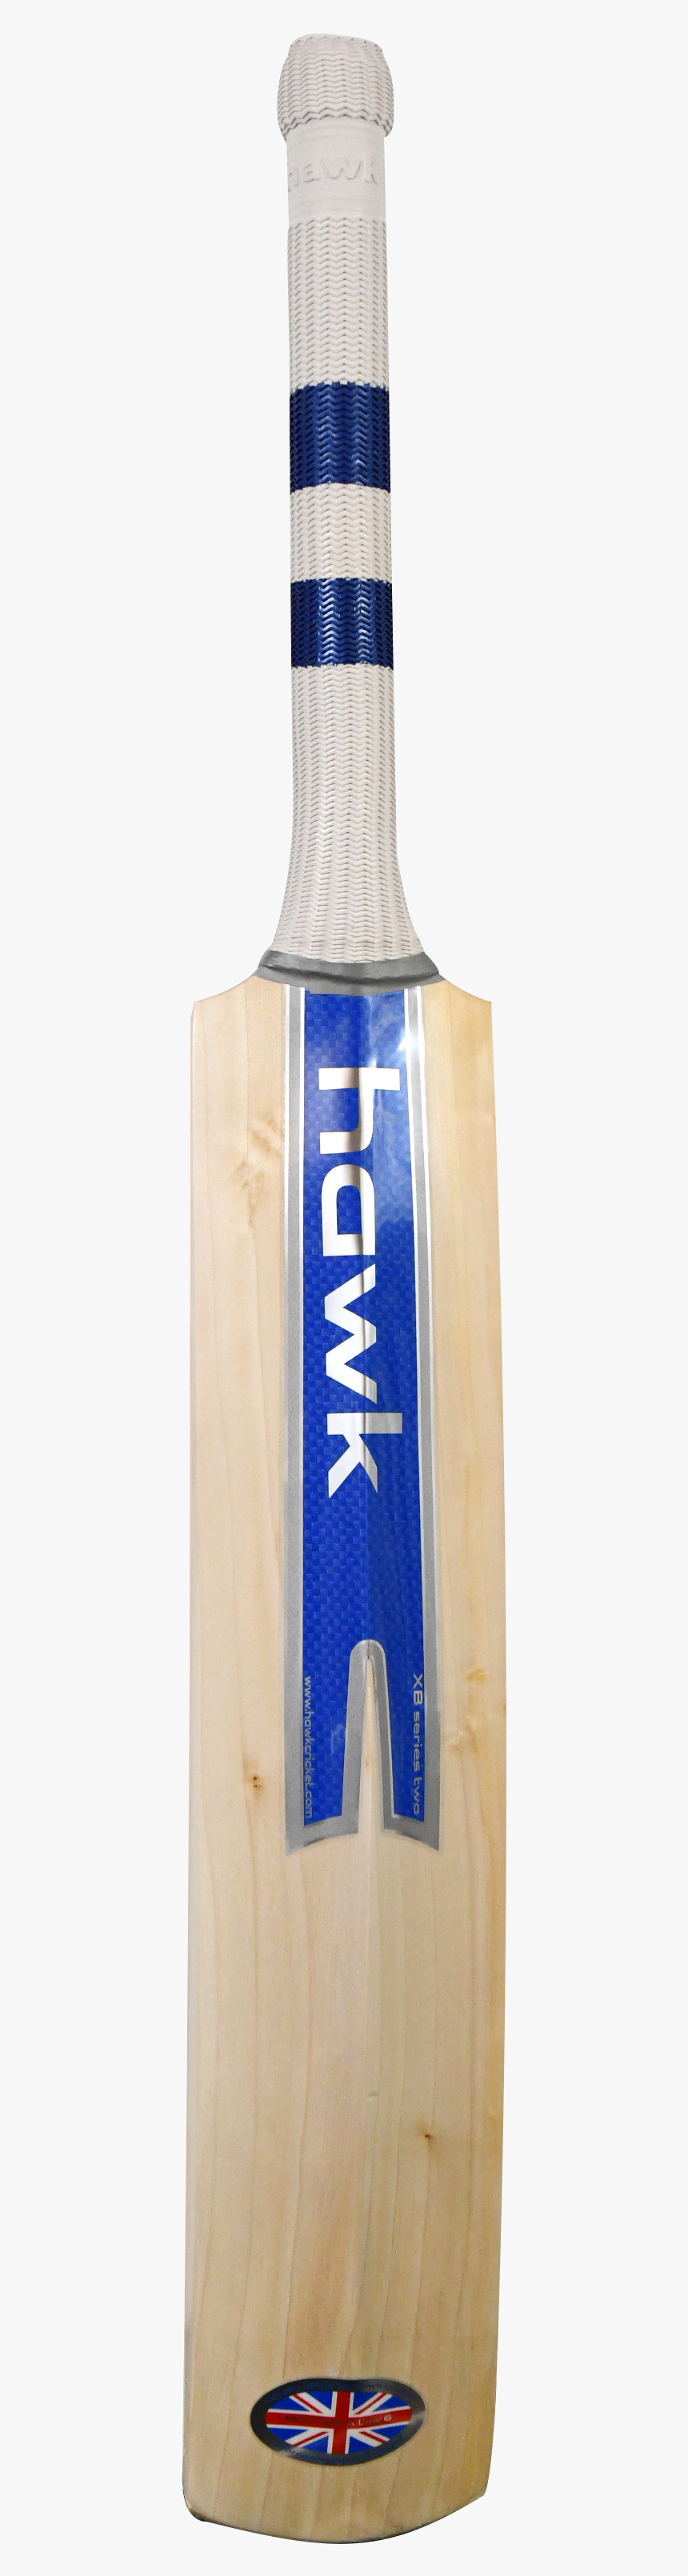 Kwik Cricket, HD Png Download, Free Download